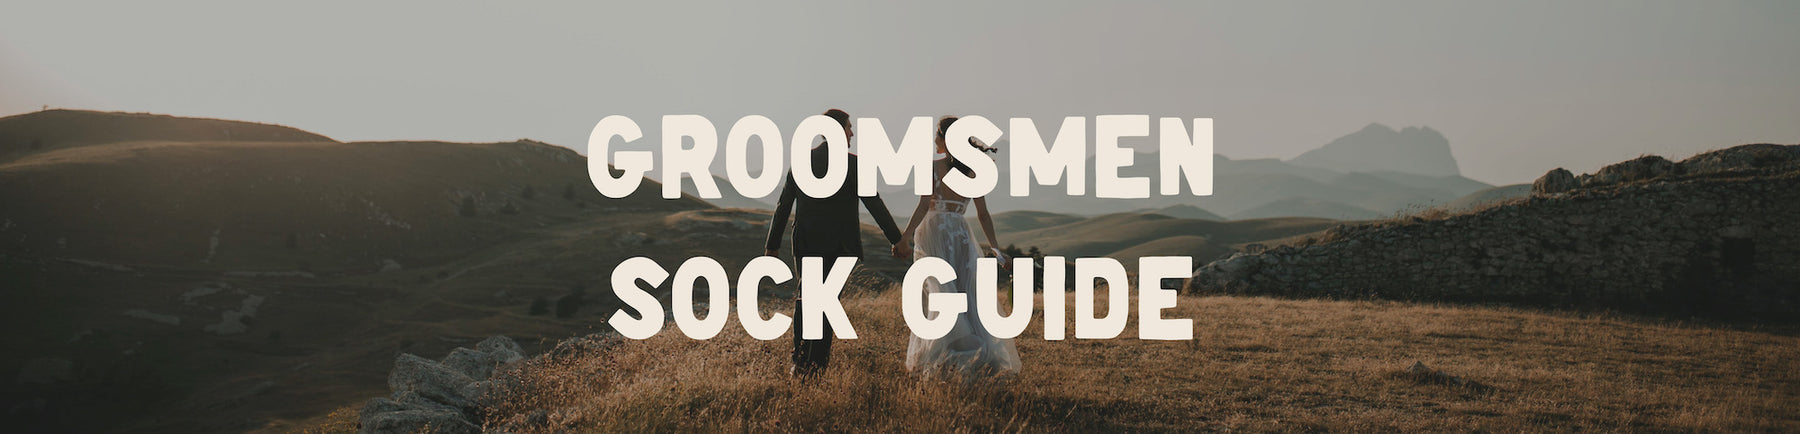 Groomsmen Sock Guide